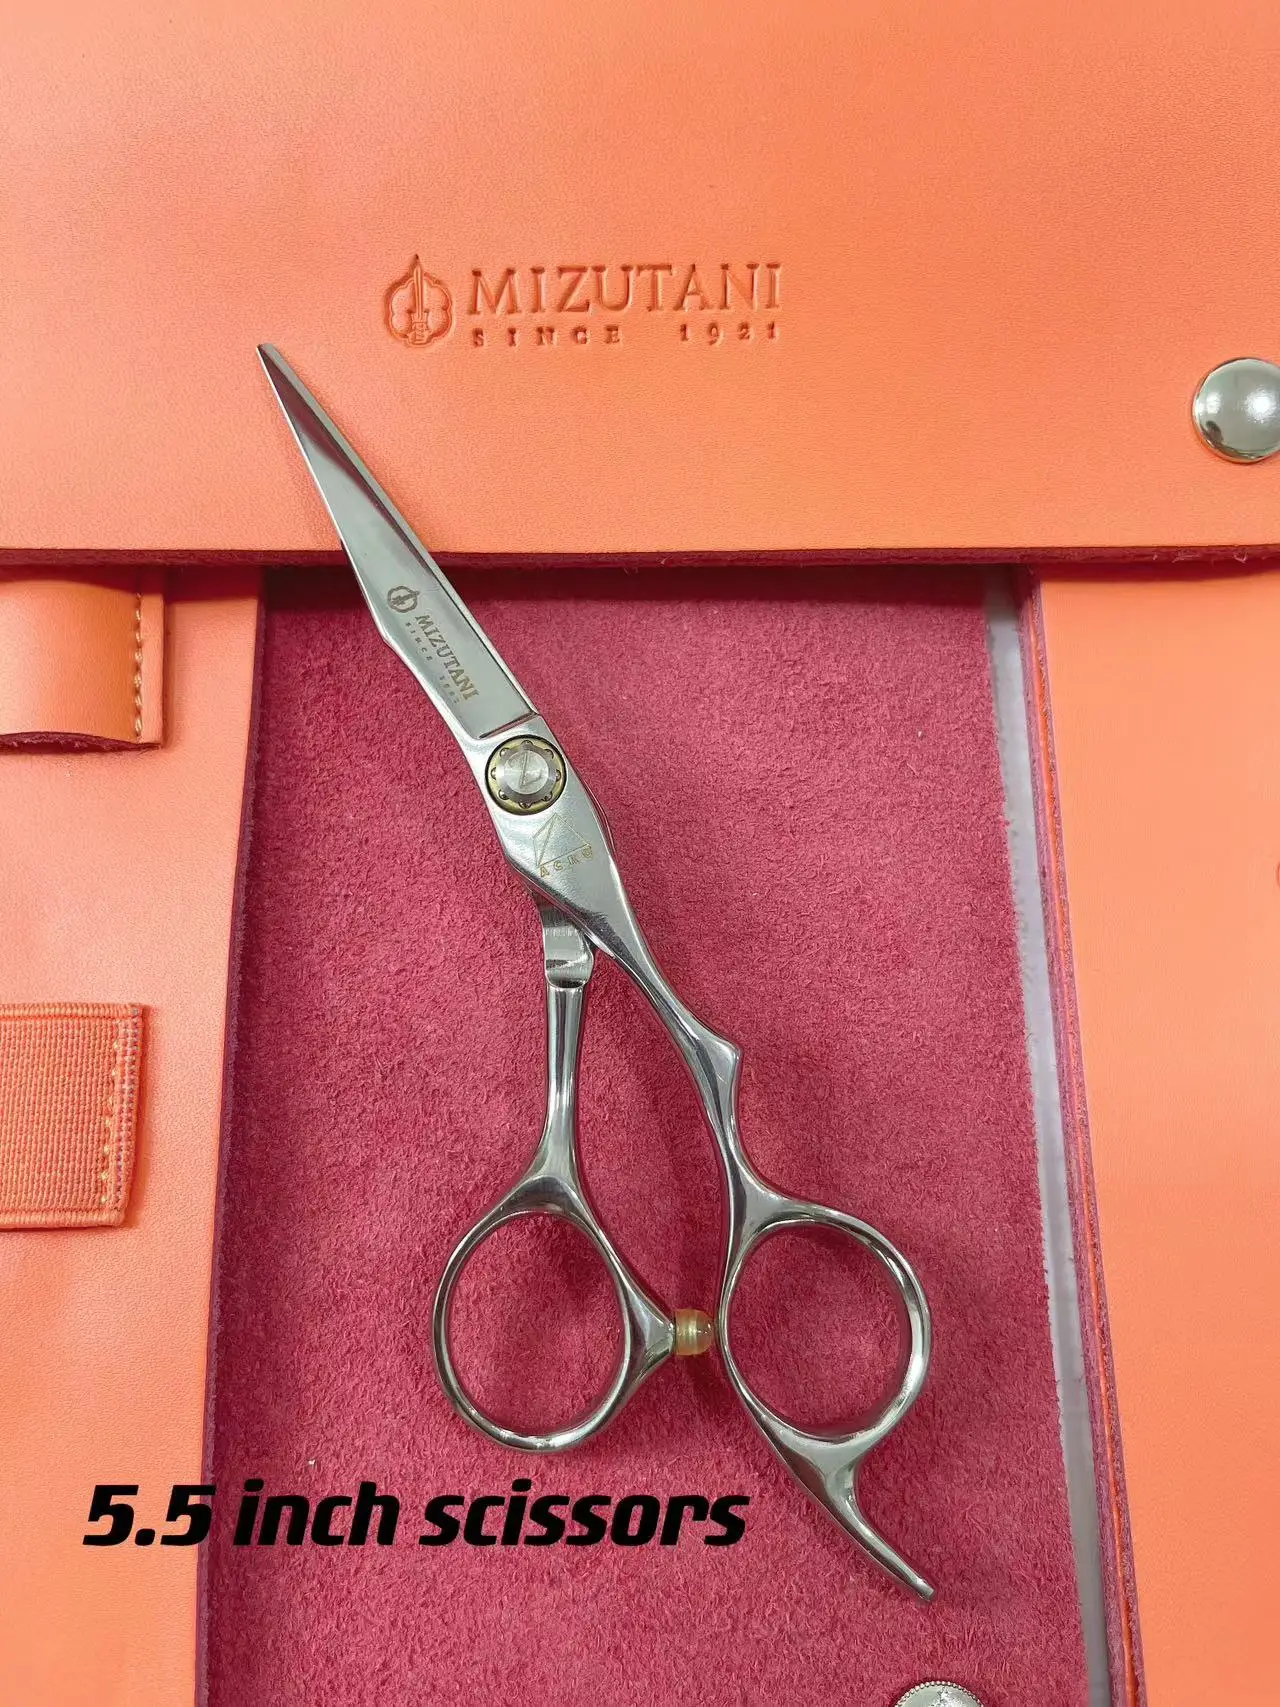 MIZUTANI SWORD DB-20 Professional Hairdressing Scissors Original